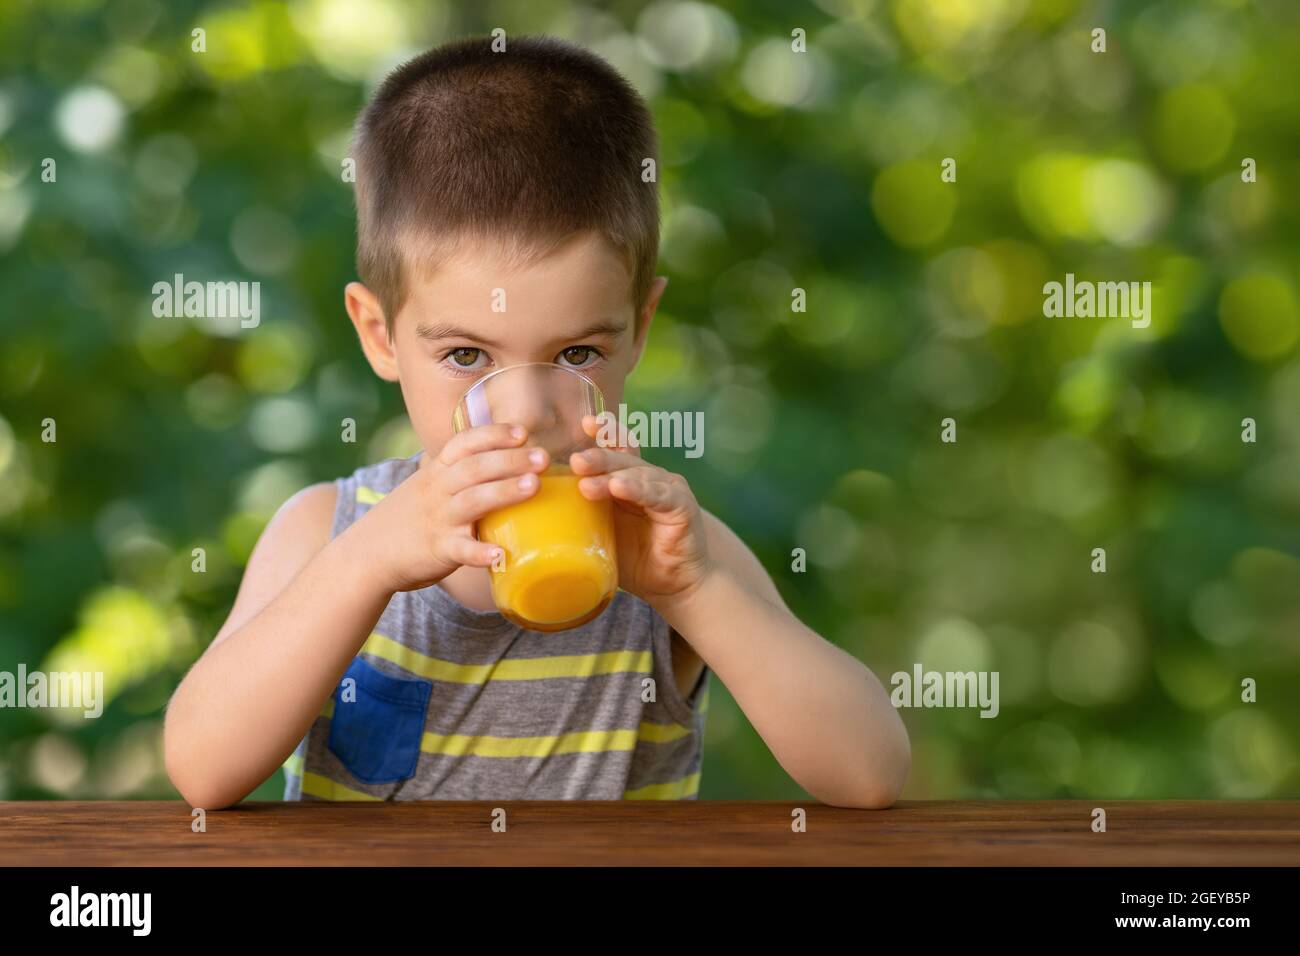 little boy drinking orange juice from glass Stock Photo